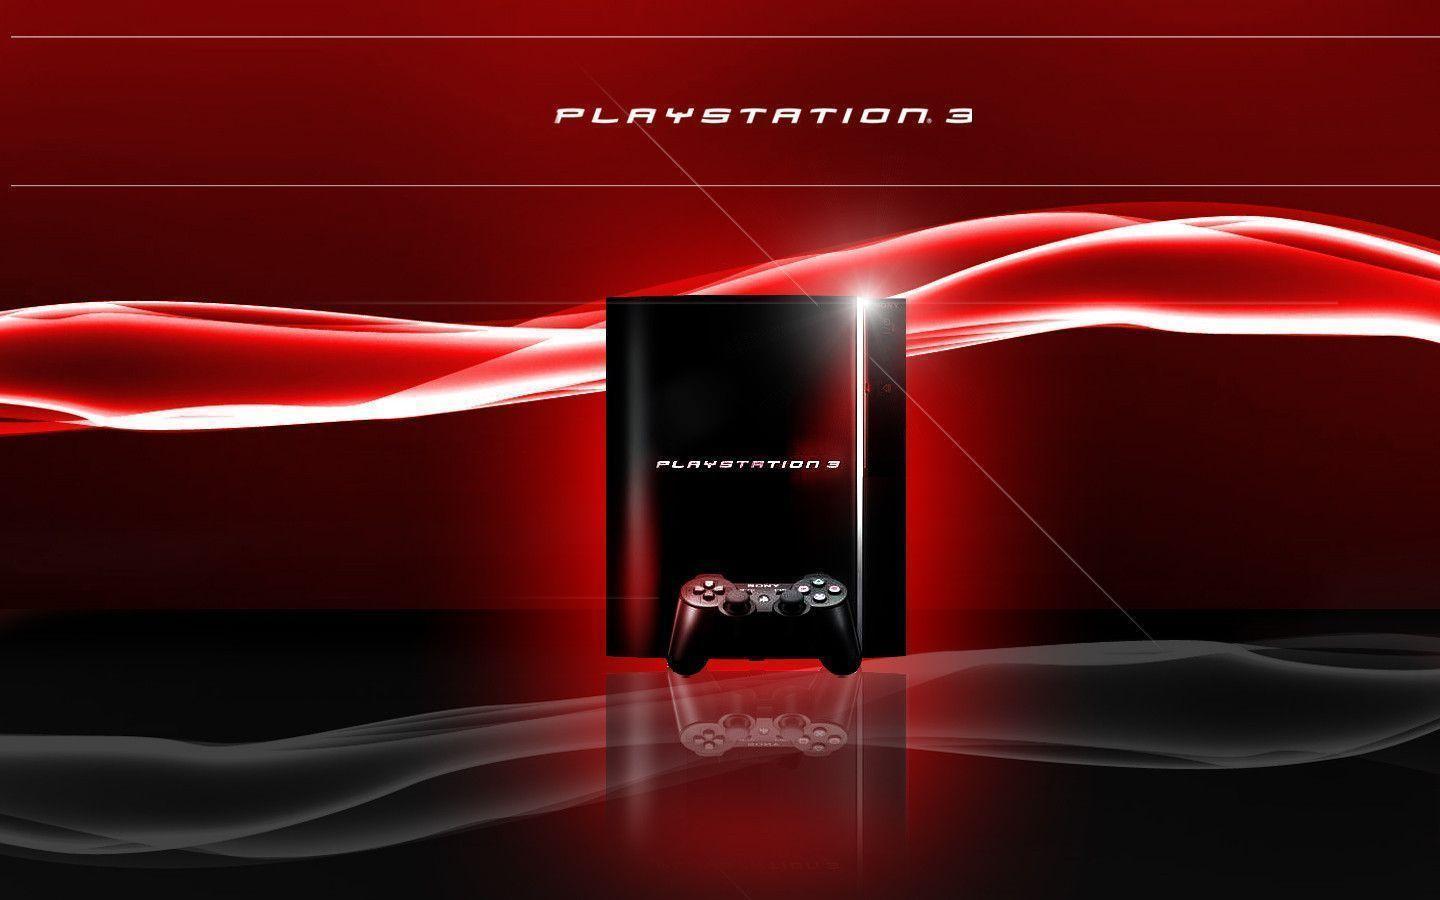 AmazingPict.com. PlayStation 3 HD Wallpaper for PC